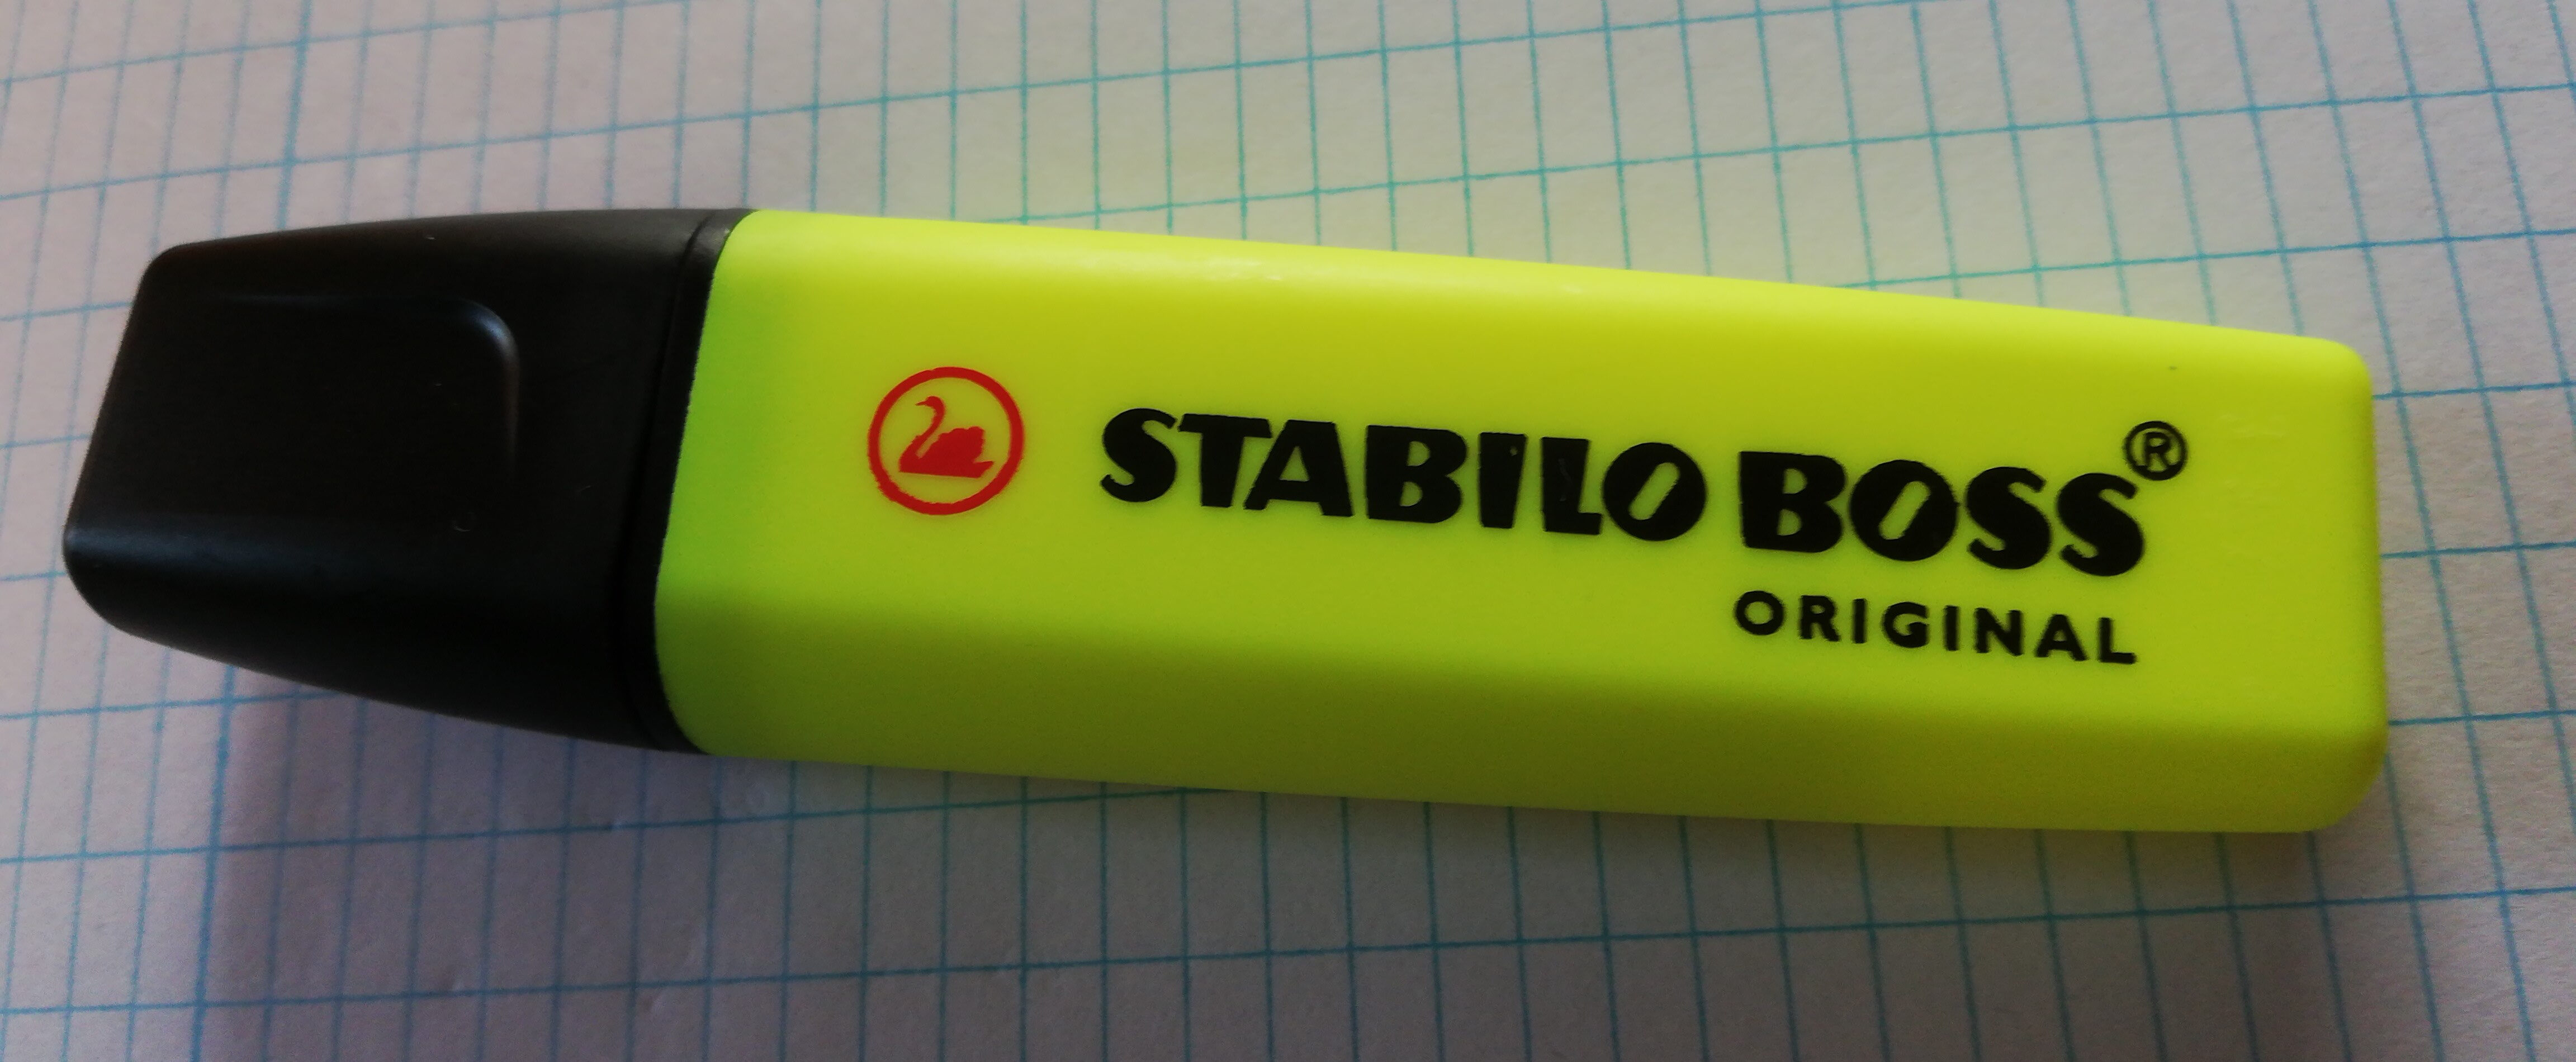 Stabilo - Product - nl